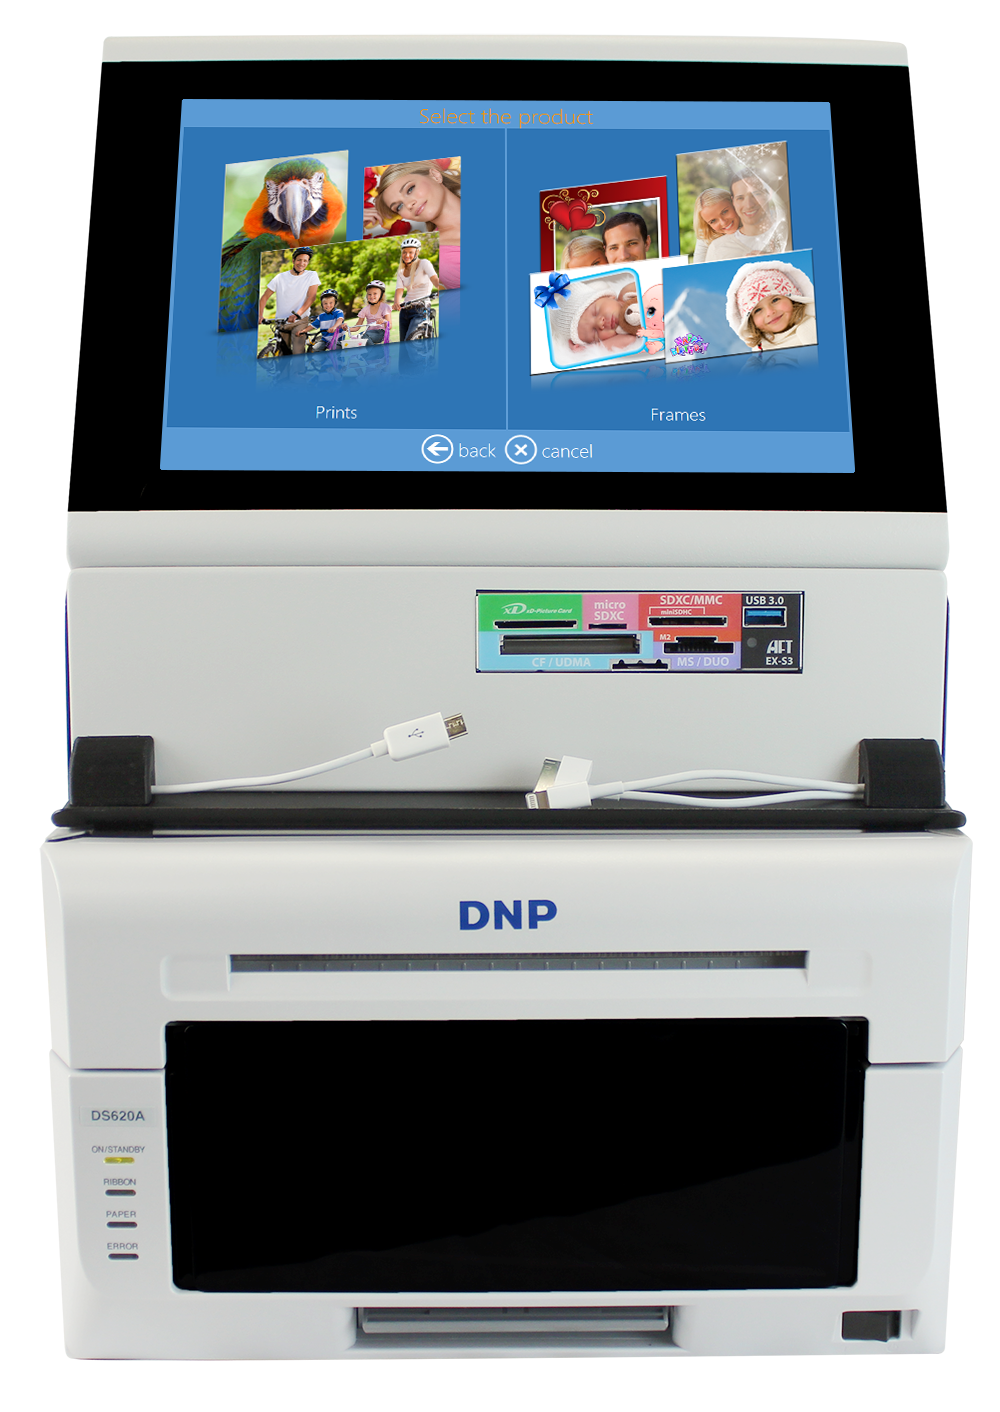 DNP SnapLab+ SL620A Compact Kiosk System (SL620A-Set)